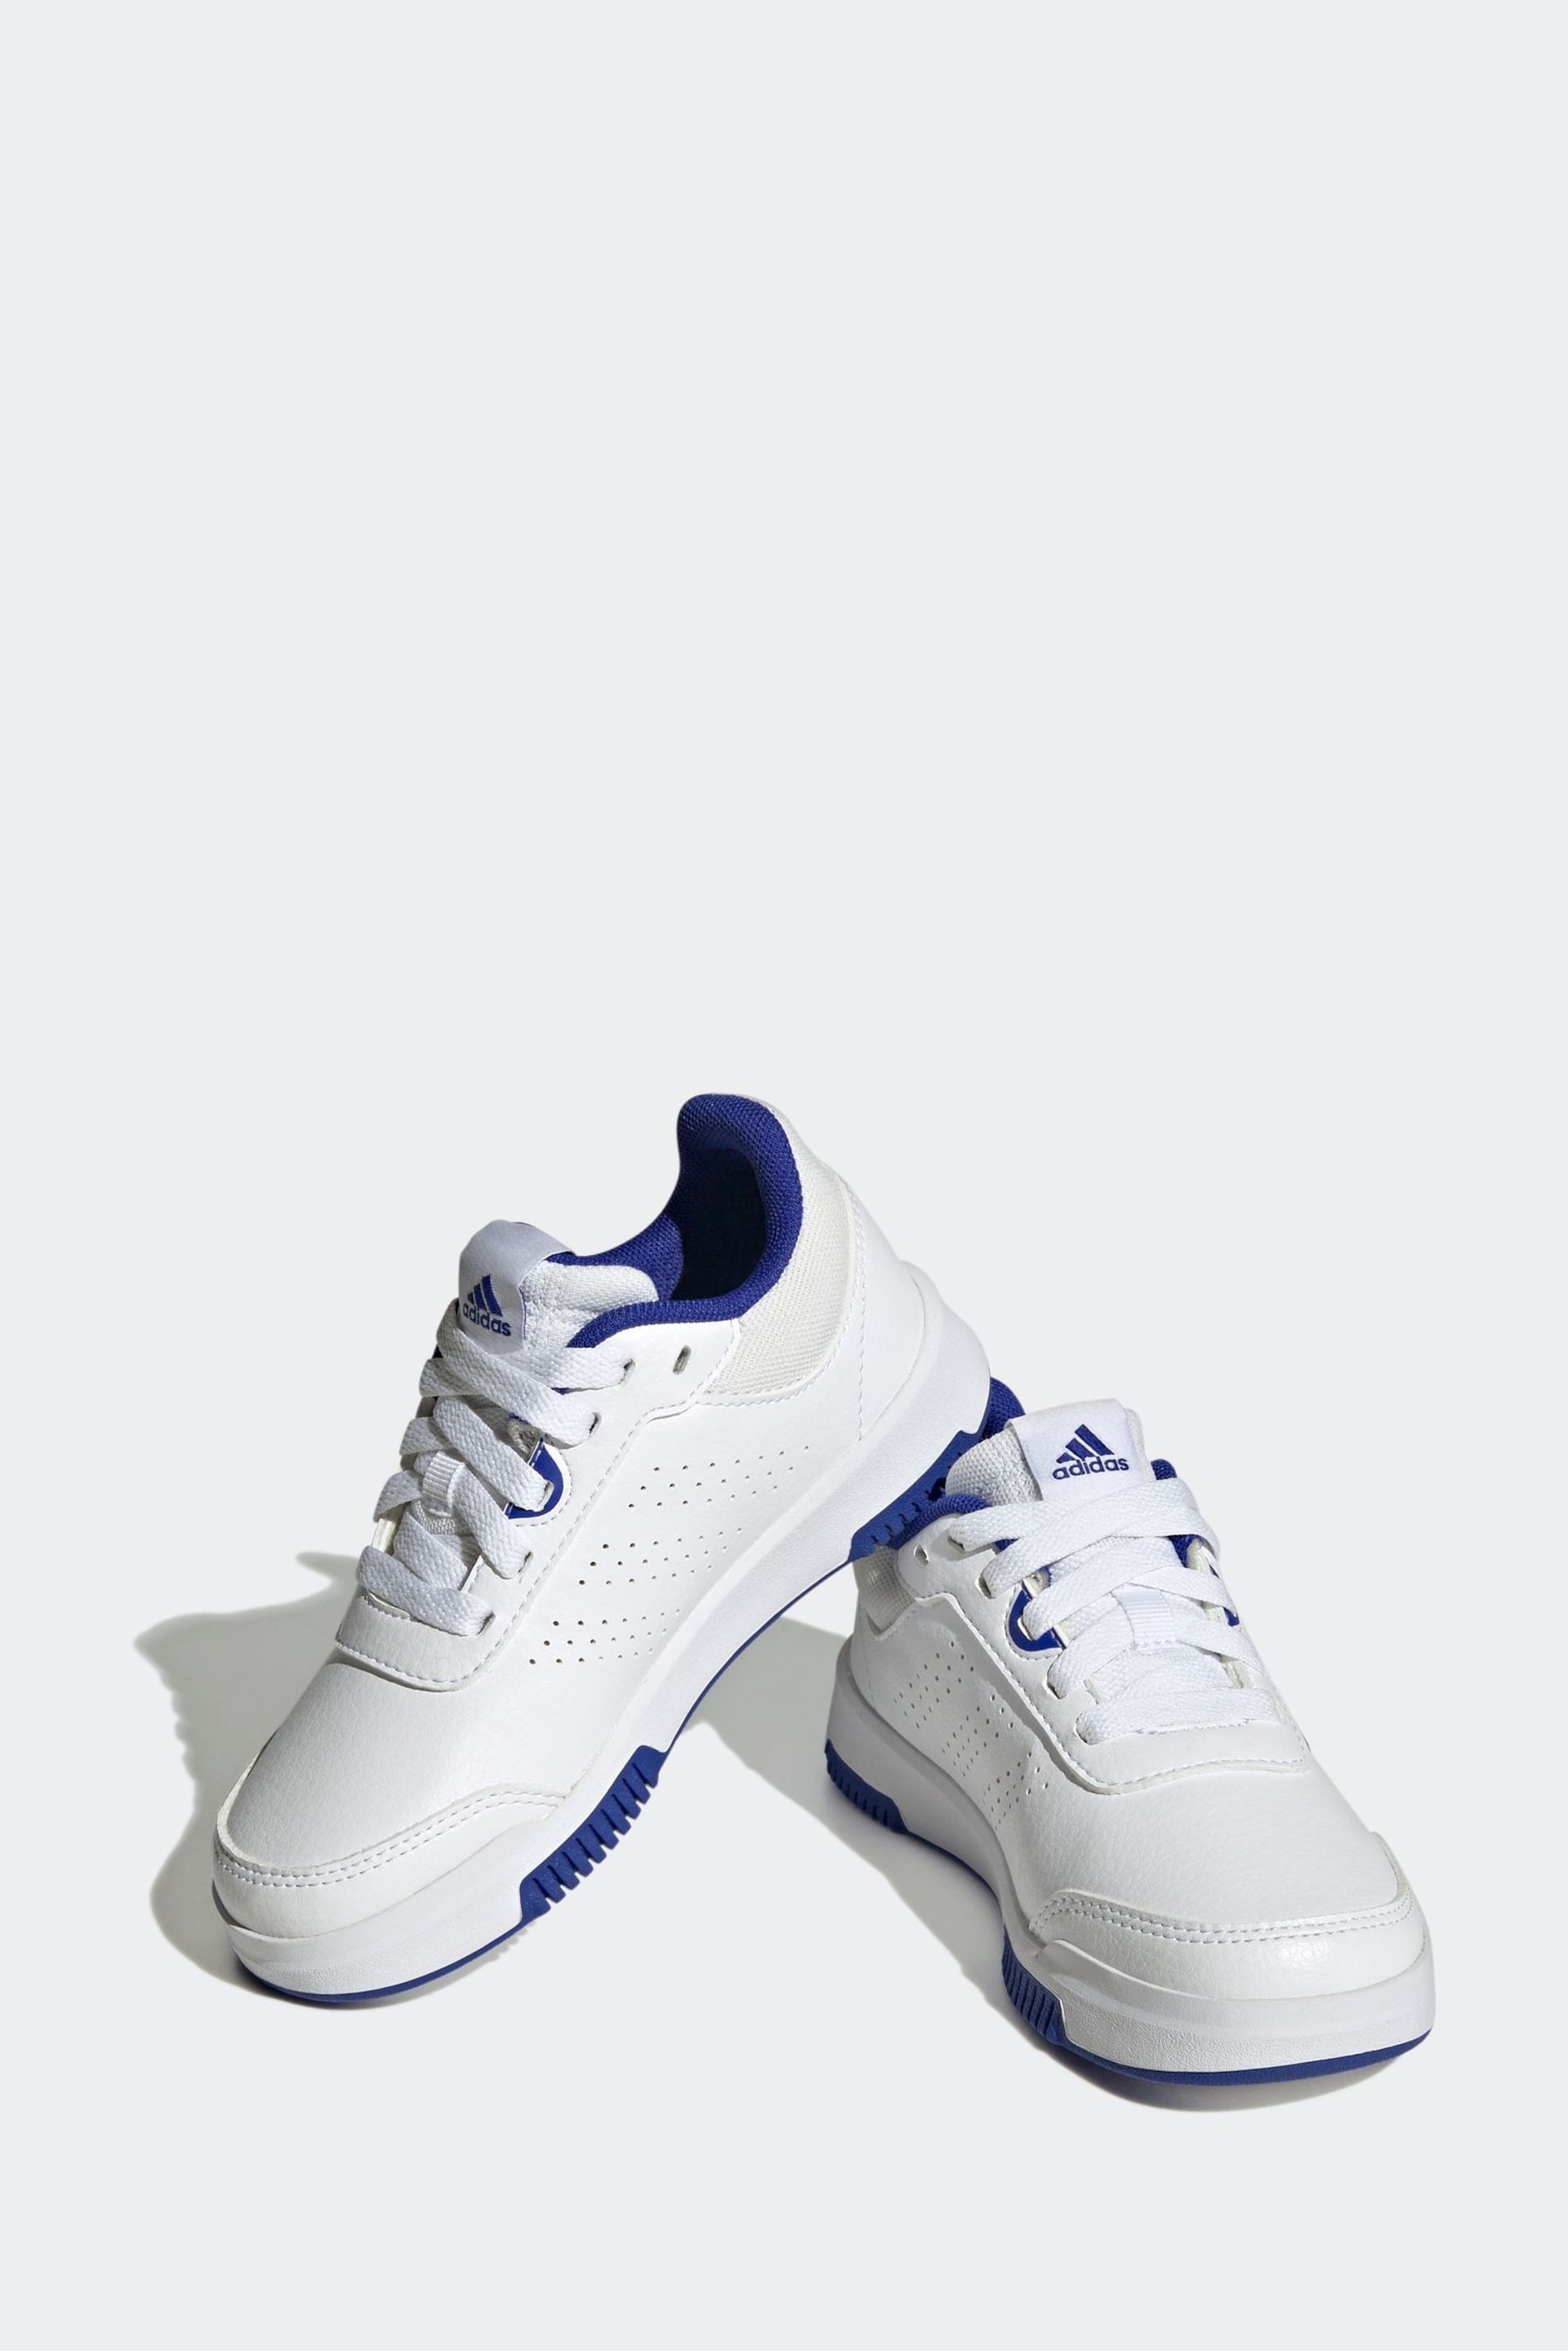 adidas White/Blue Tensaur Sport Training Lace Shoes - Image 8 of 8